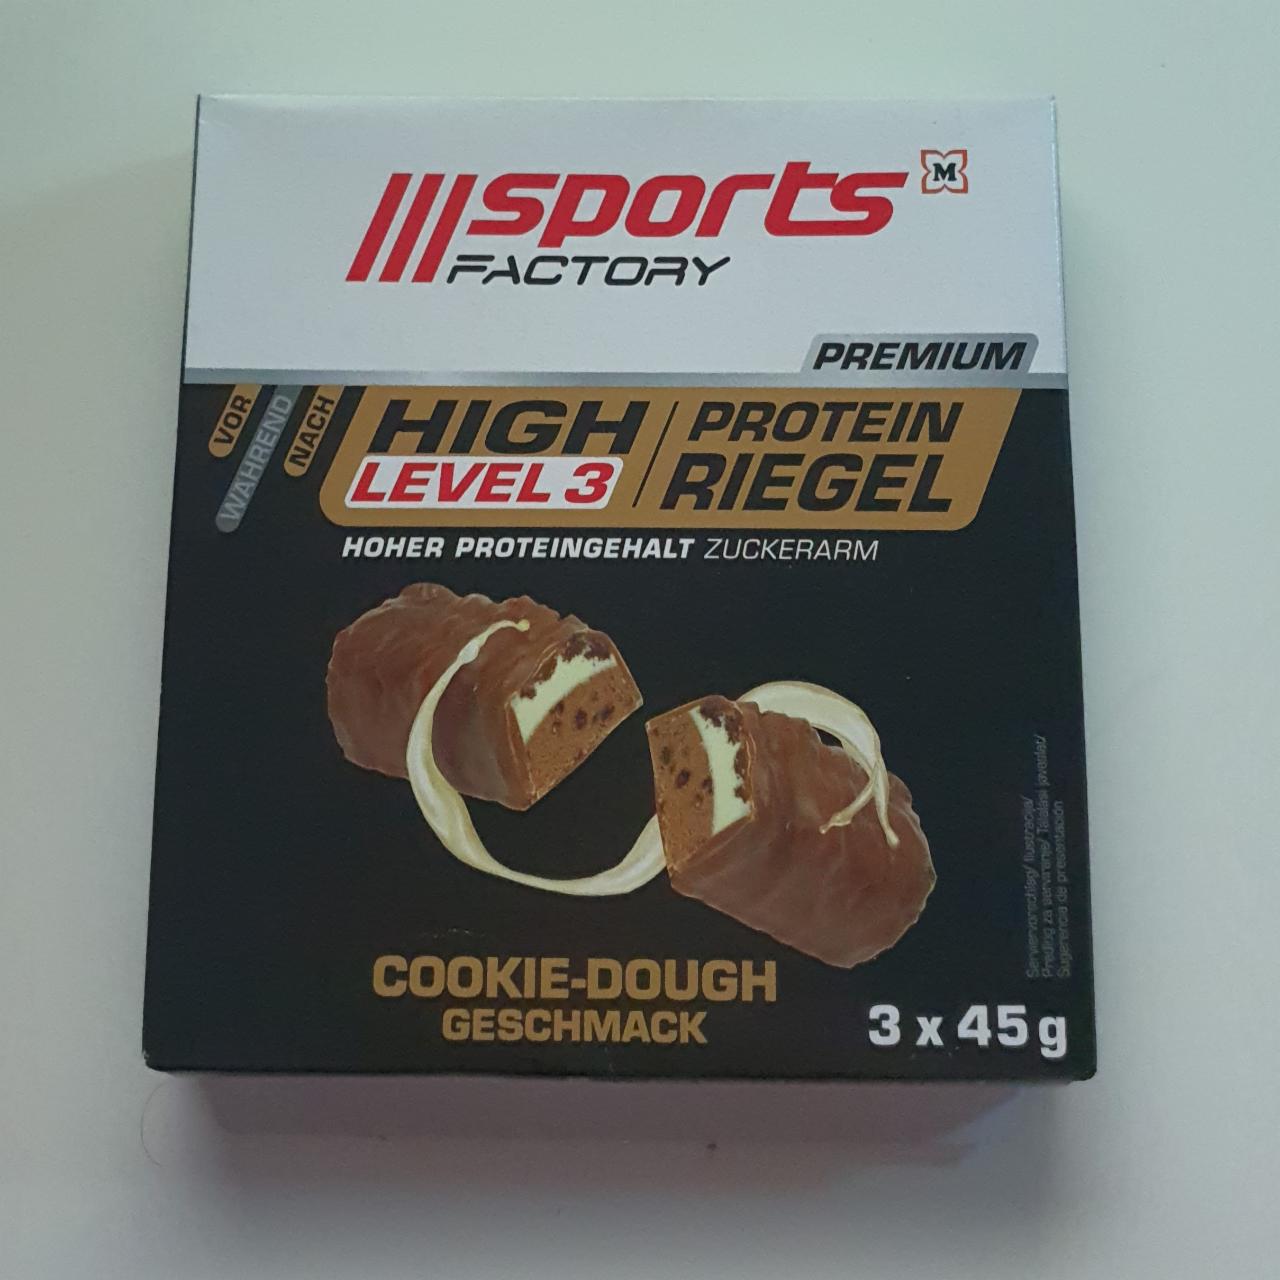 Fotografie - Premium Protein Riegel Cookie-Dough geschmack Sports Factory